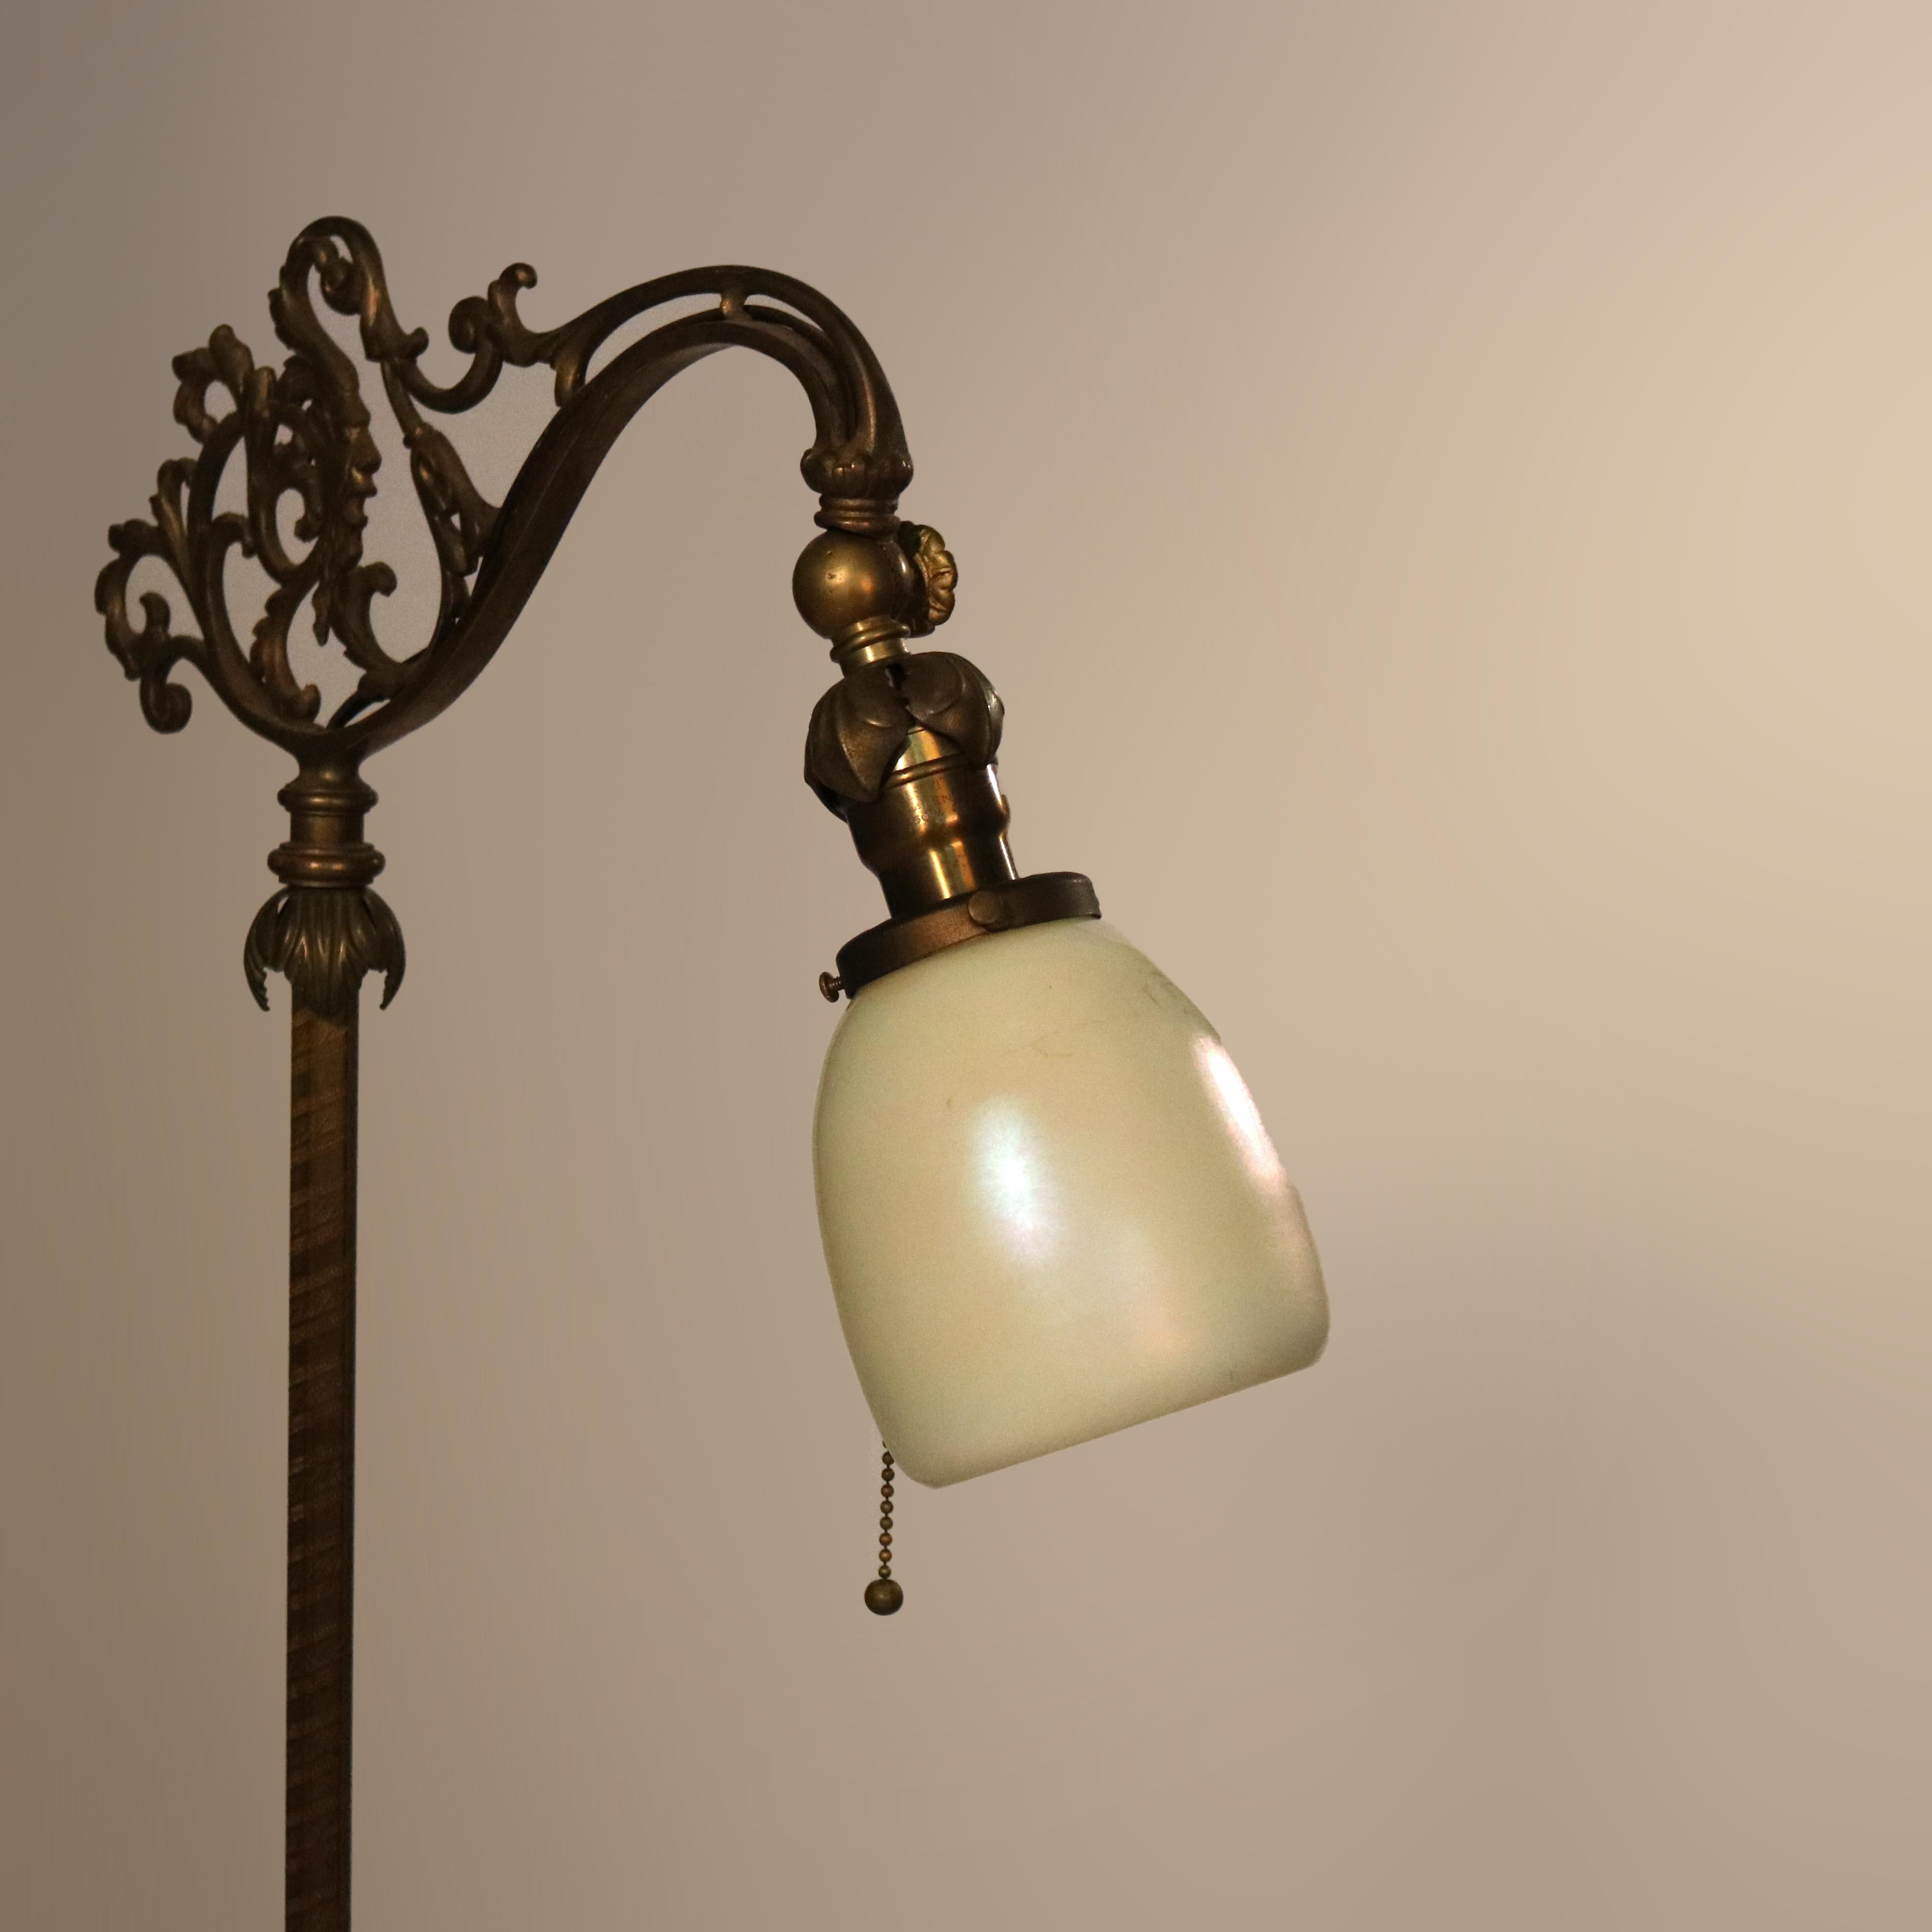 American Antique Arts & Crafts Figural Rembrandt Gilt Metal & Onyx Floor Lamp c1920 